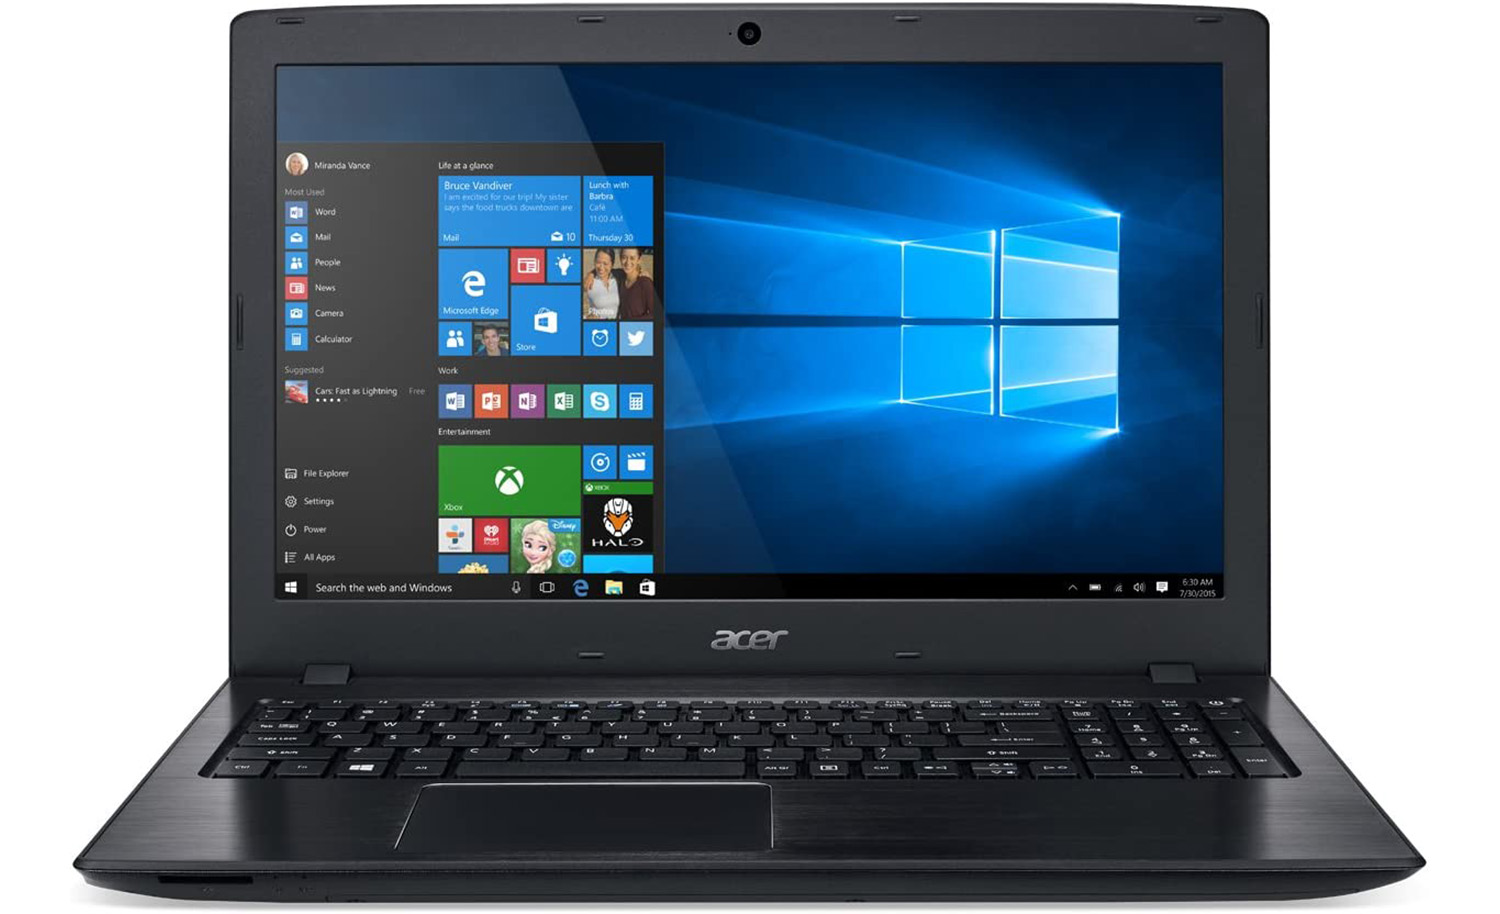 Acer Aspire E5 Intel Core i7 6th Gen 8GB RAM 256GB SSD Windows 10 Home Nvidia GeForce 940MX